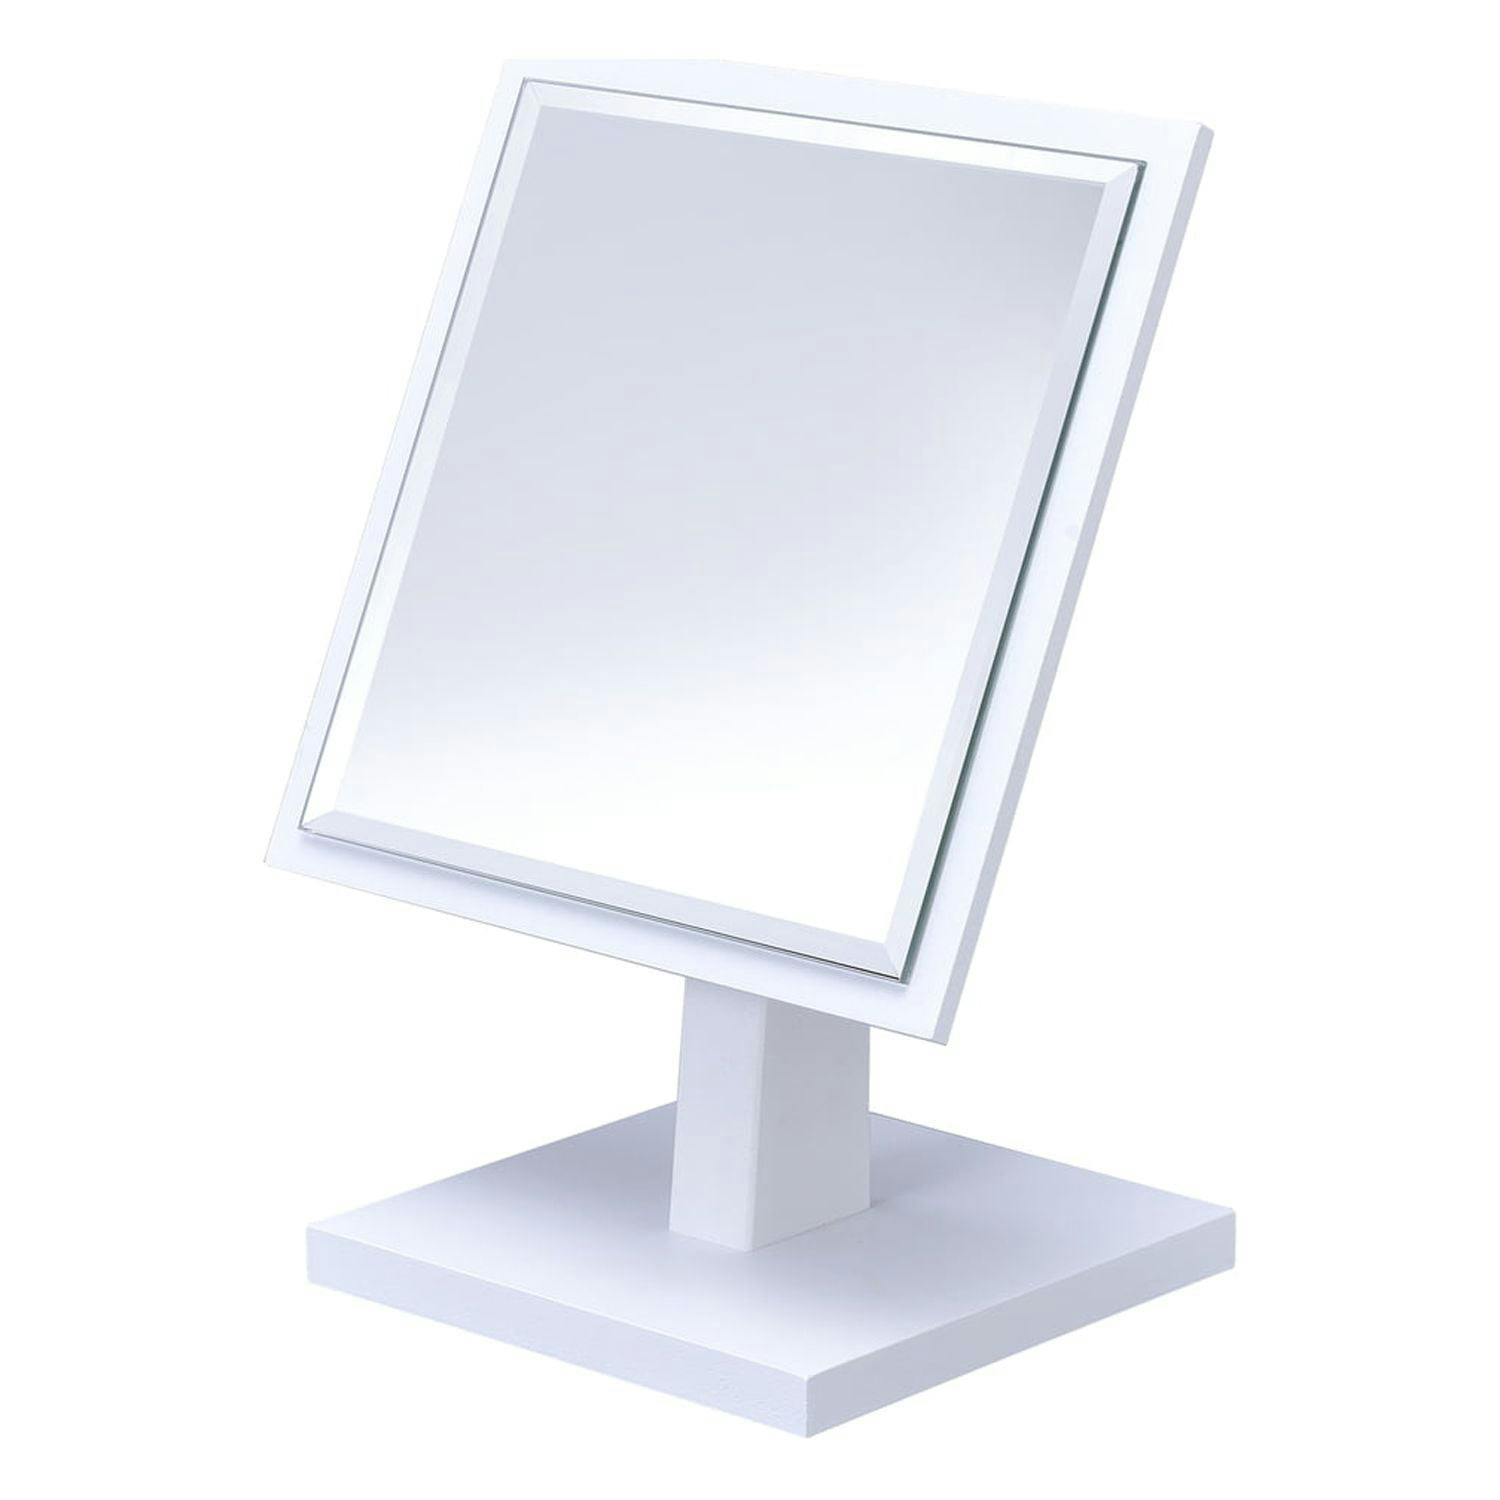 Antique Square Beveled White Vanity Mirror on Pedestal